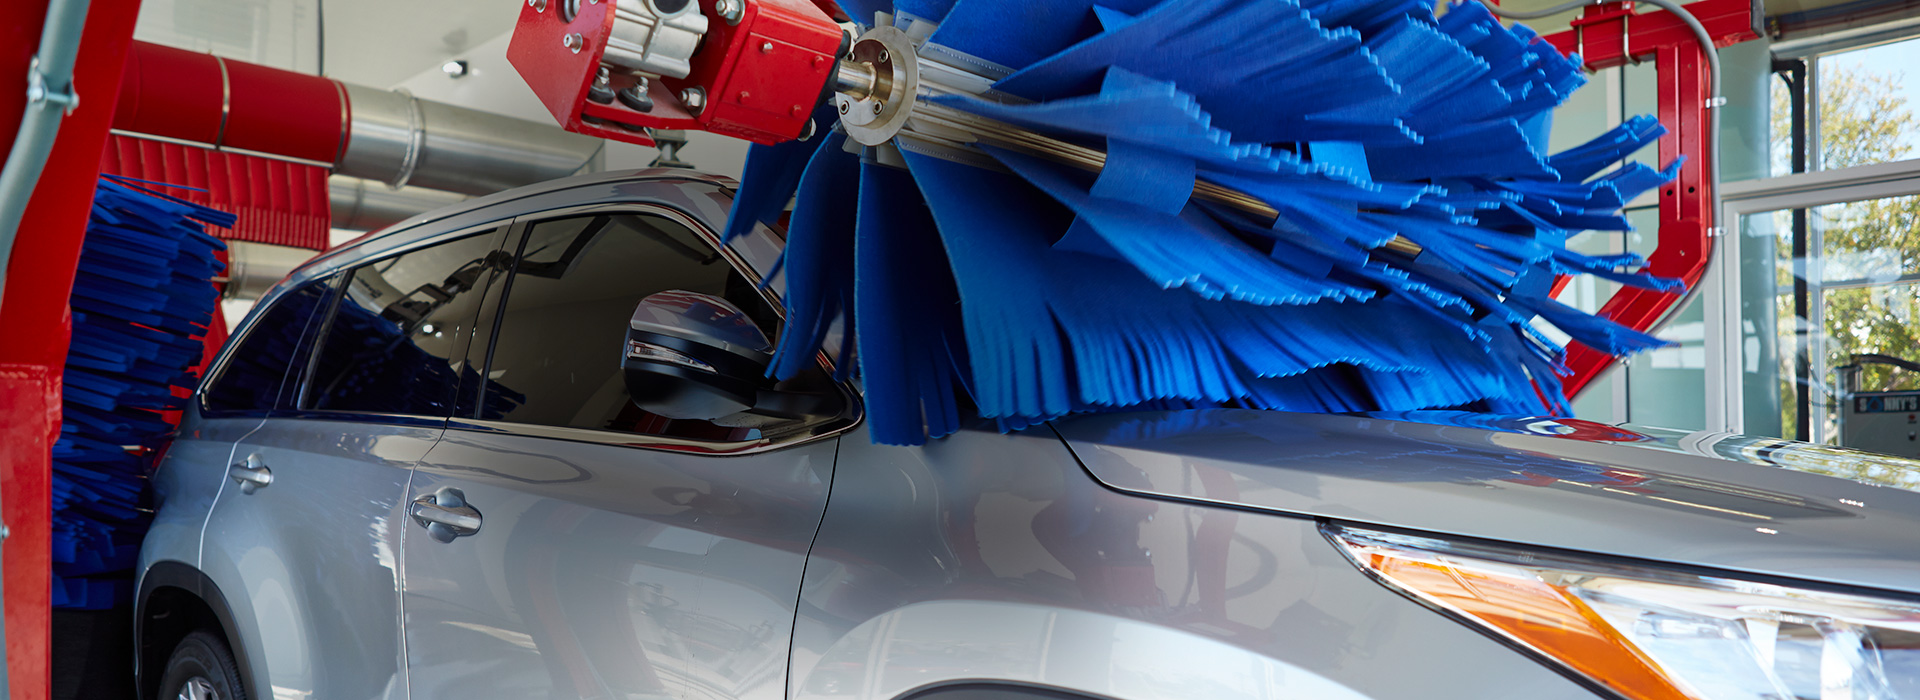 Professoinal Car Washing Services